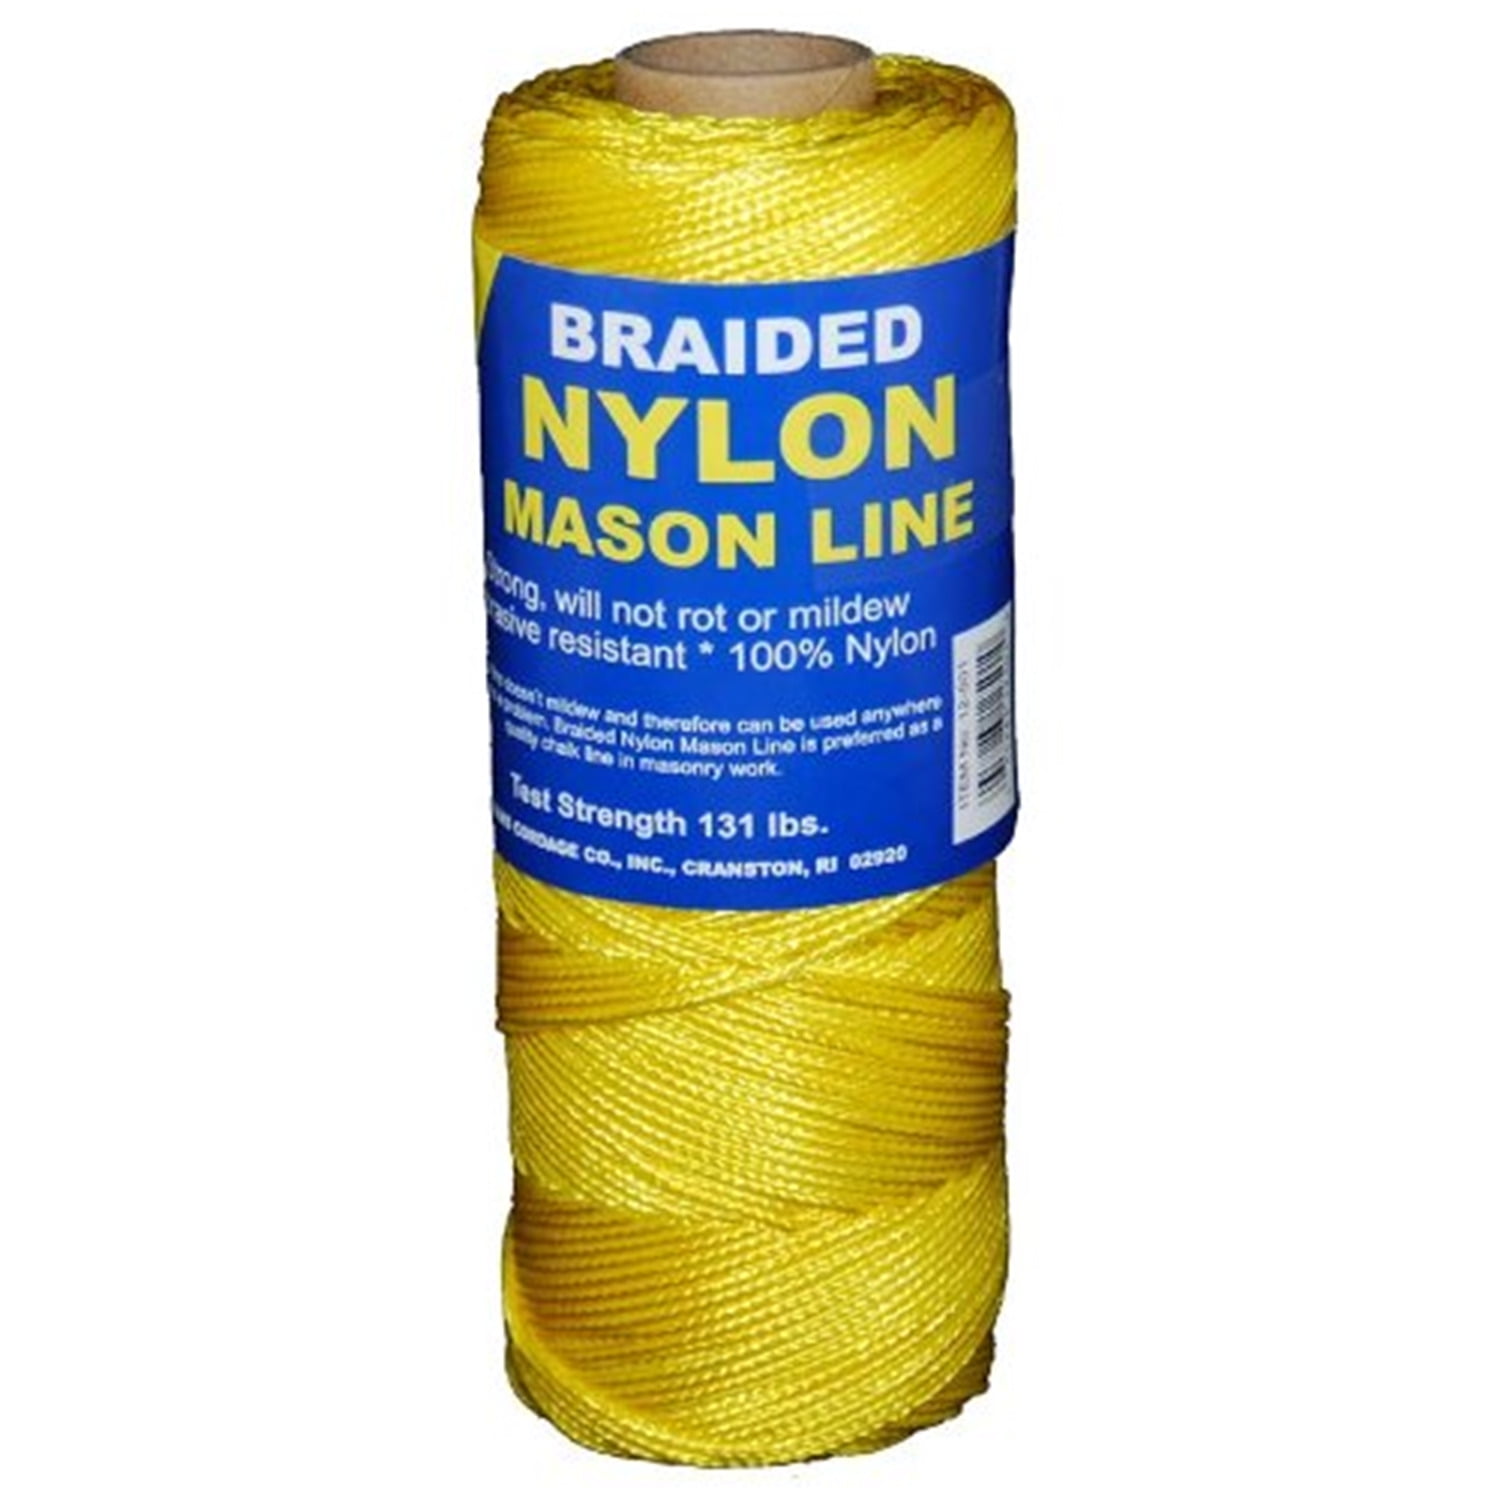 T.W Evans Cordage 12-250 Number-1 Braided Nylon Mason Line 250-Feet 